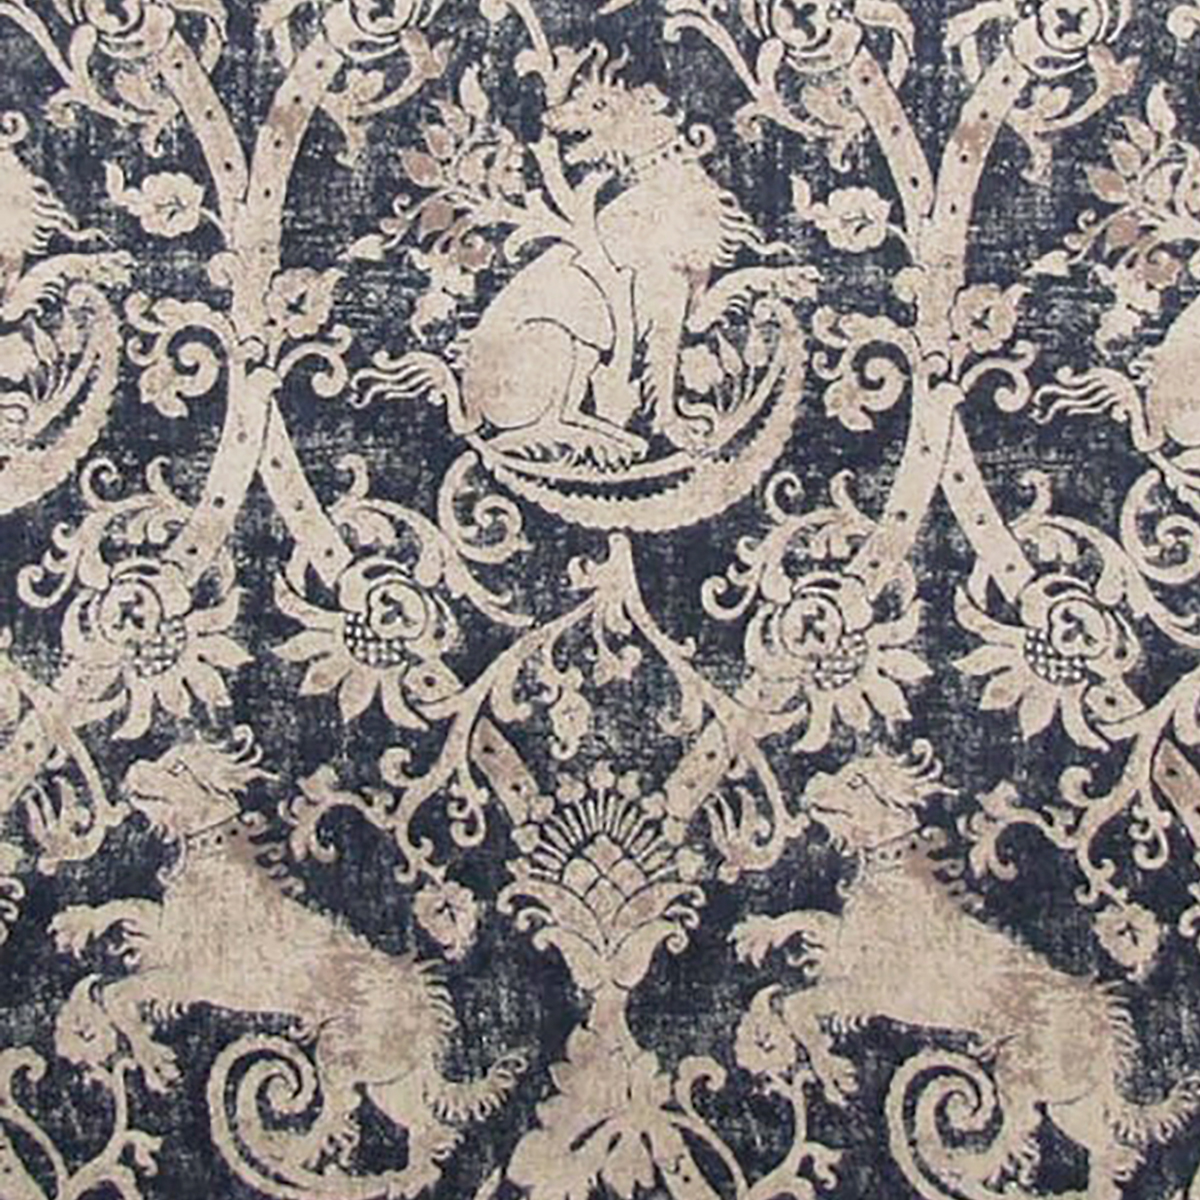 Fabric 30 - Classical Pattern Indigo